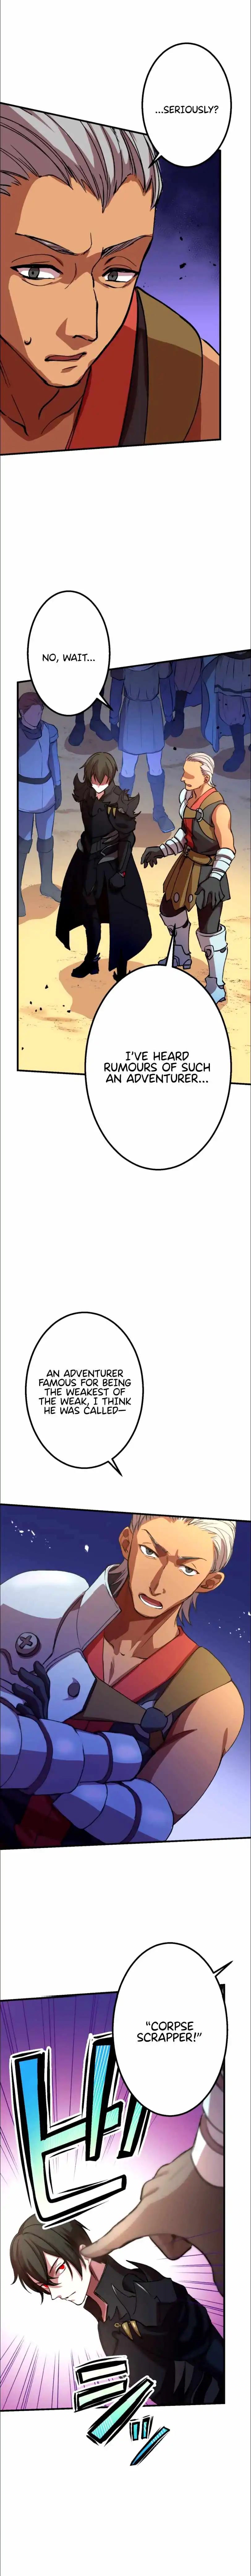 Level Drain (Manga) Chapter 21